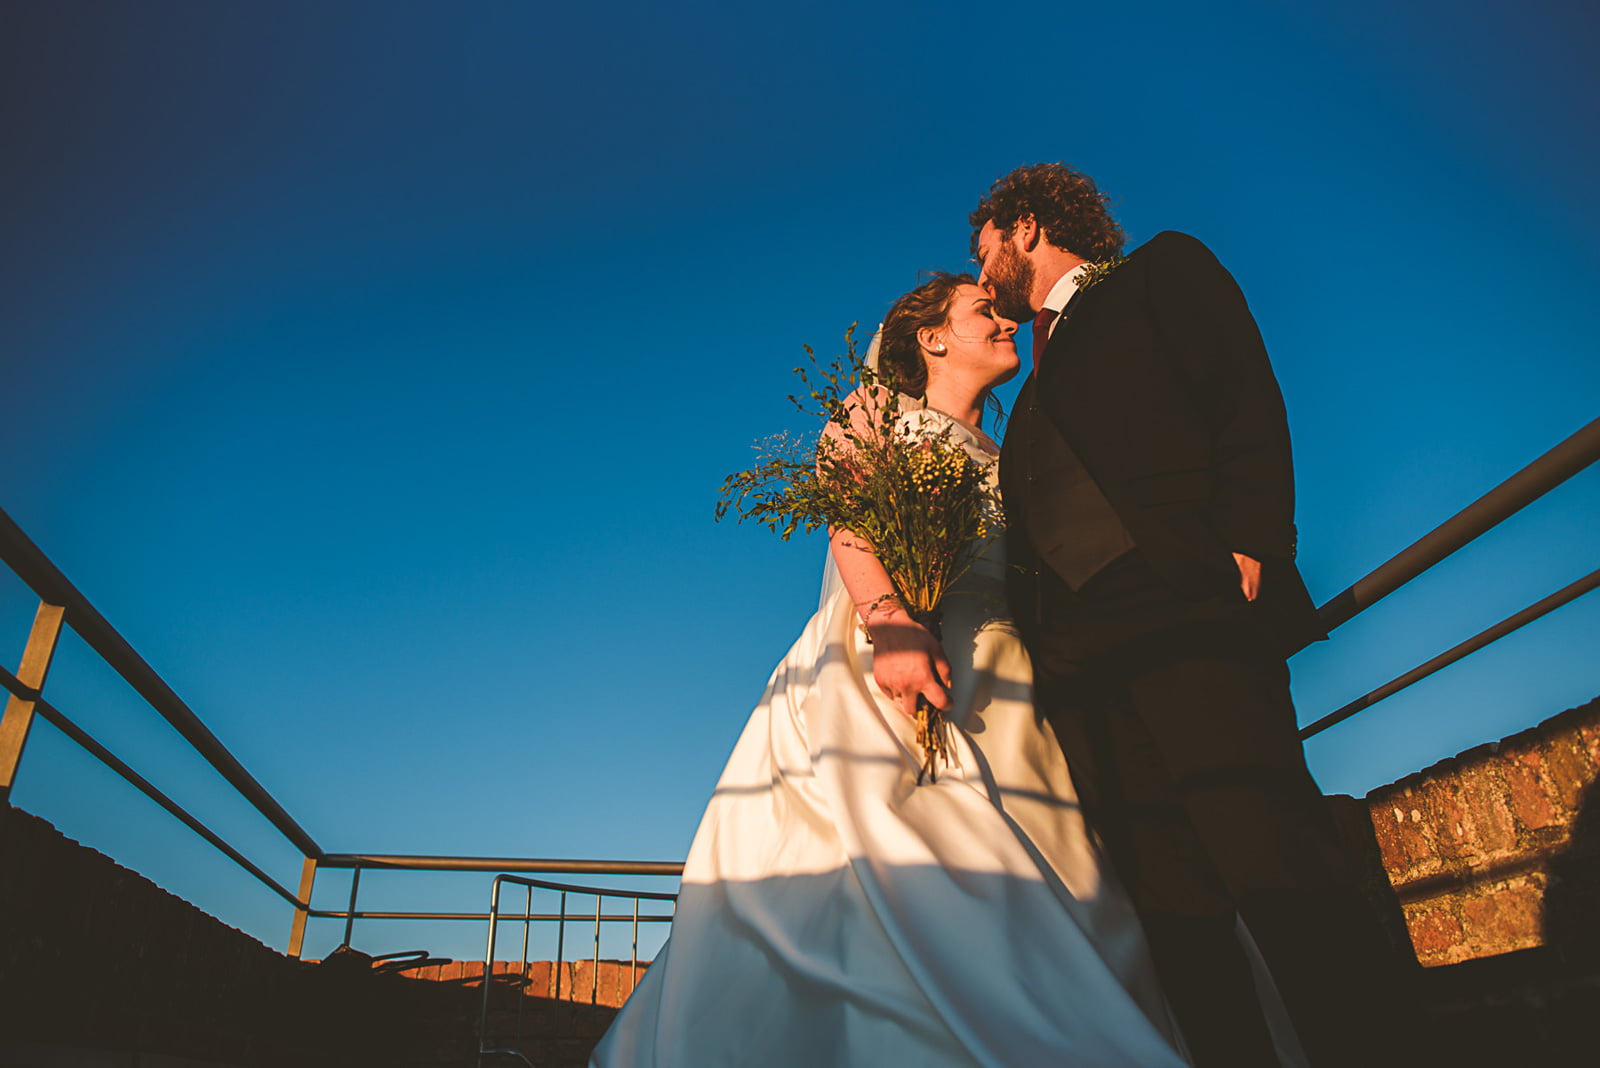 Wedding at Siena, A+L Wedding At Siena Town Hall &#8211; By Federico Pannacci Wedding Photographer, Federico Pannacci